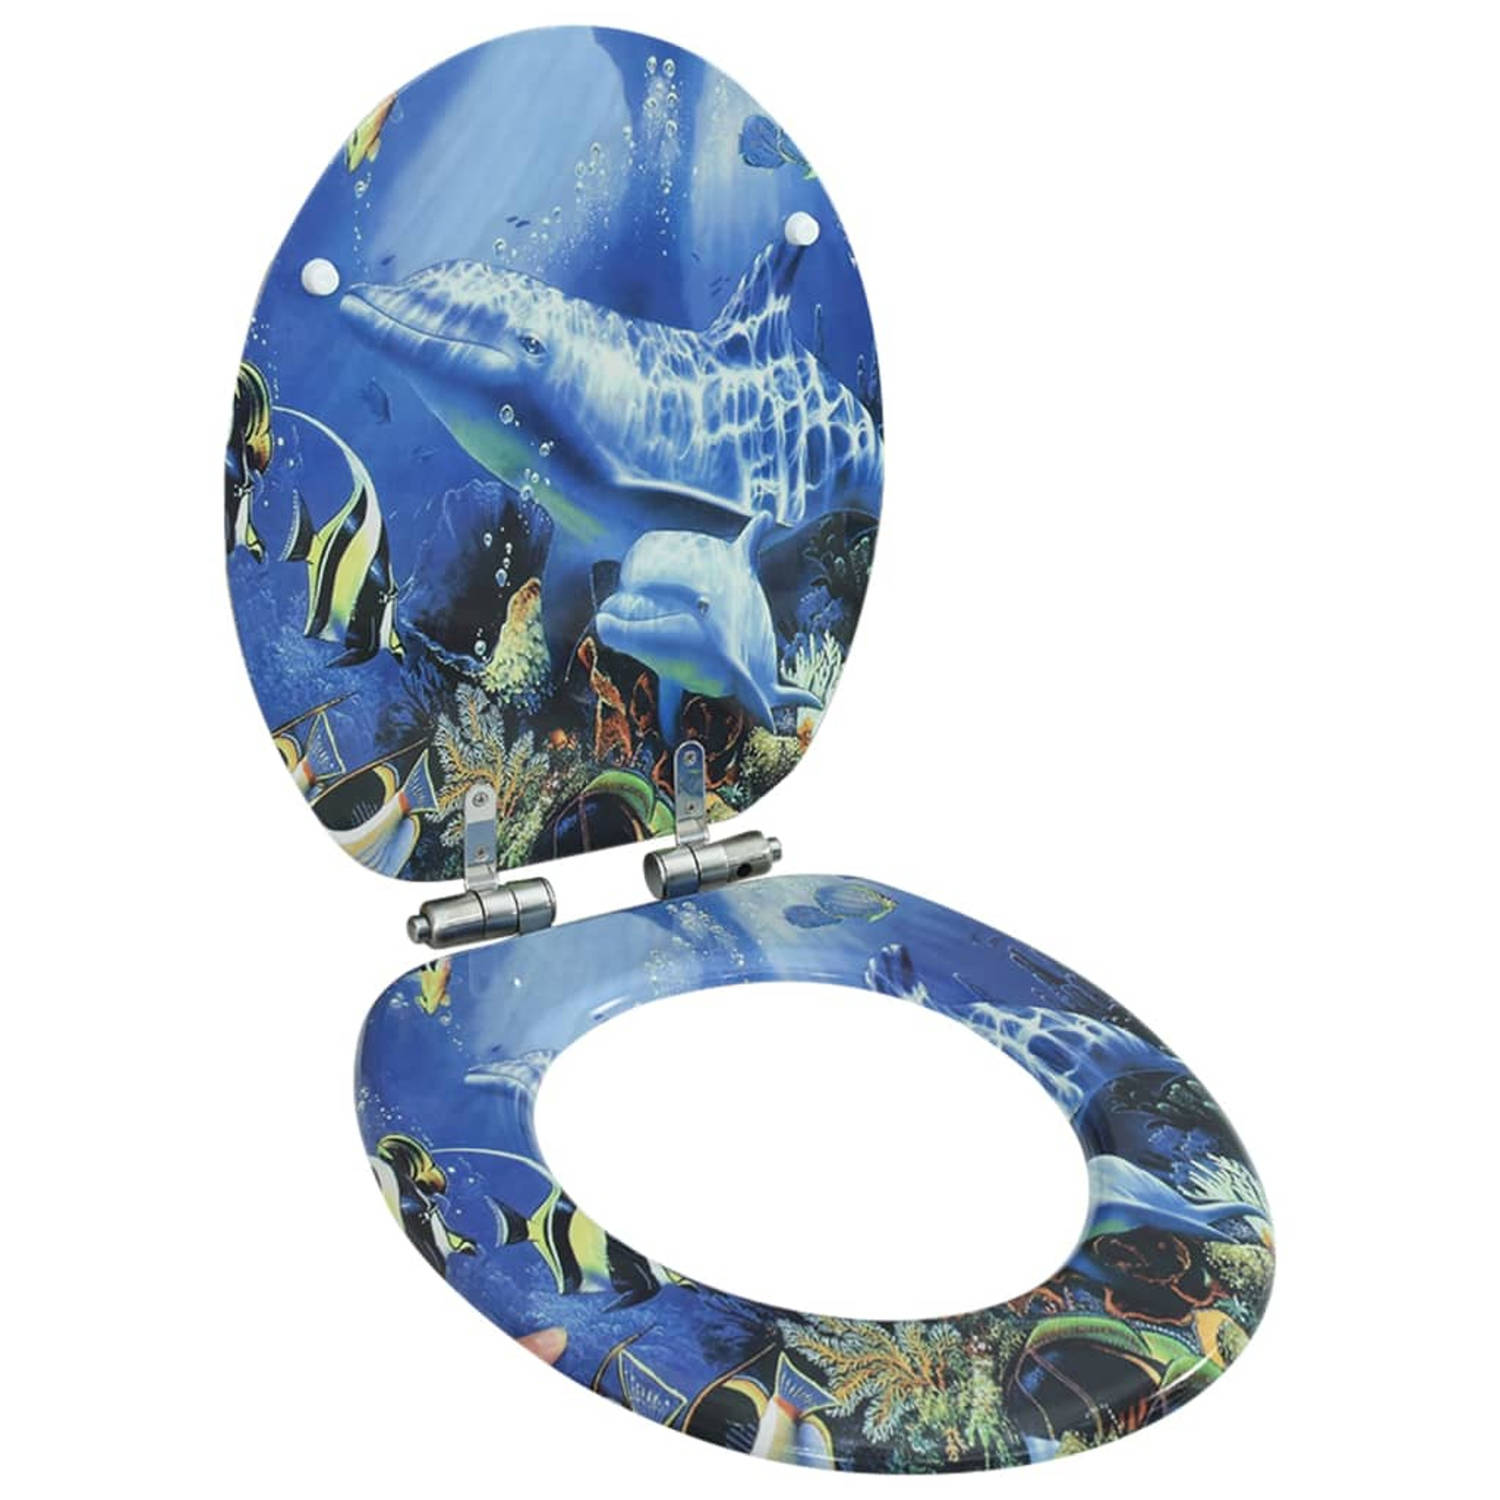 vidaXL Toiletbril met soft-close deksel MDF dolfijnen print